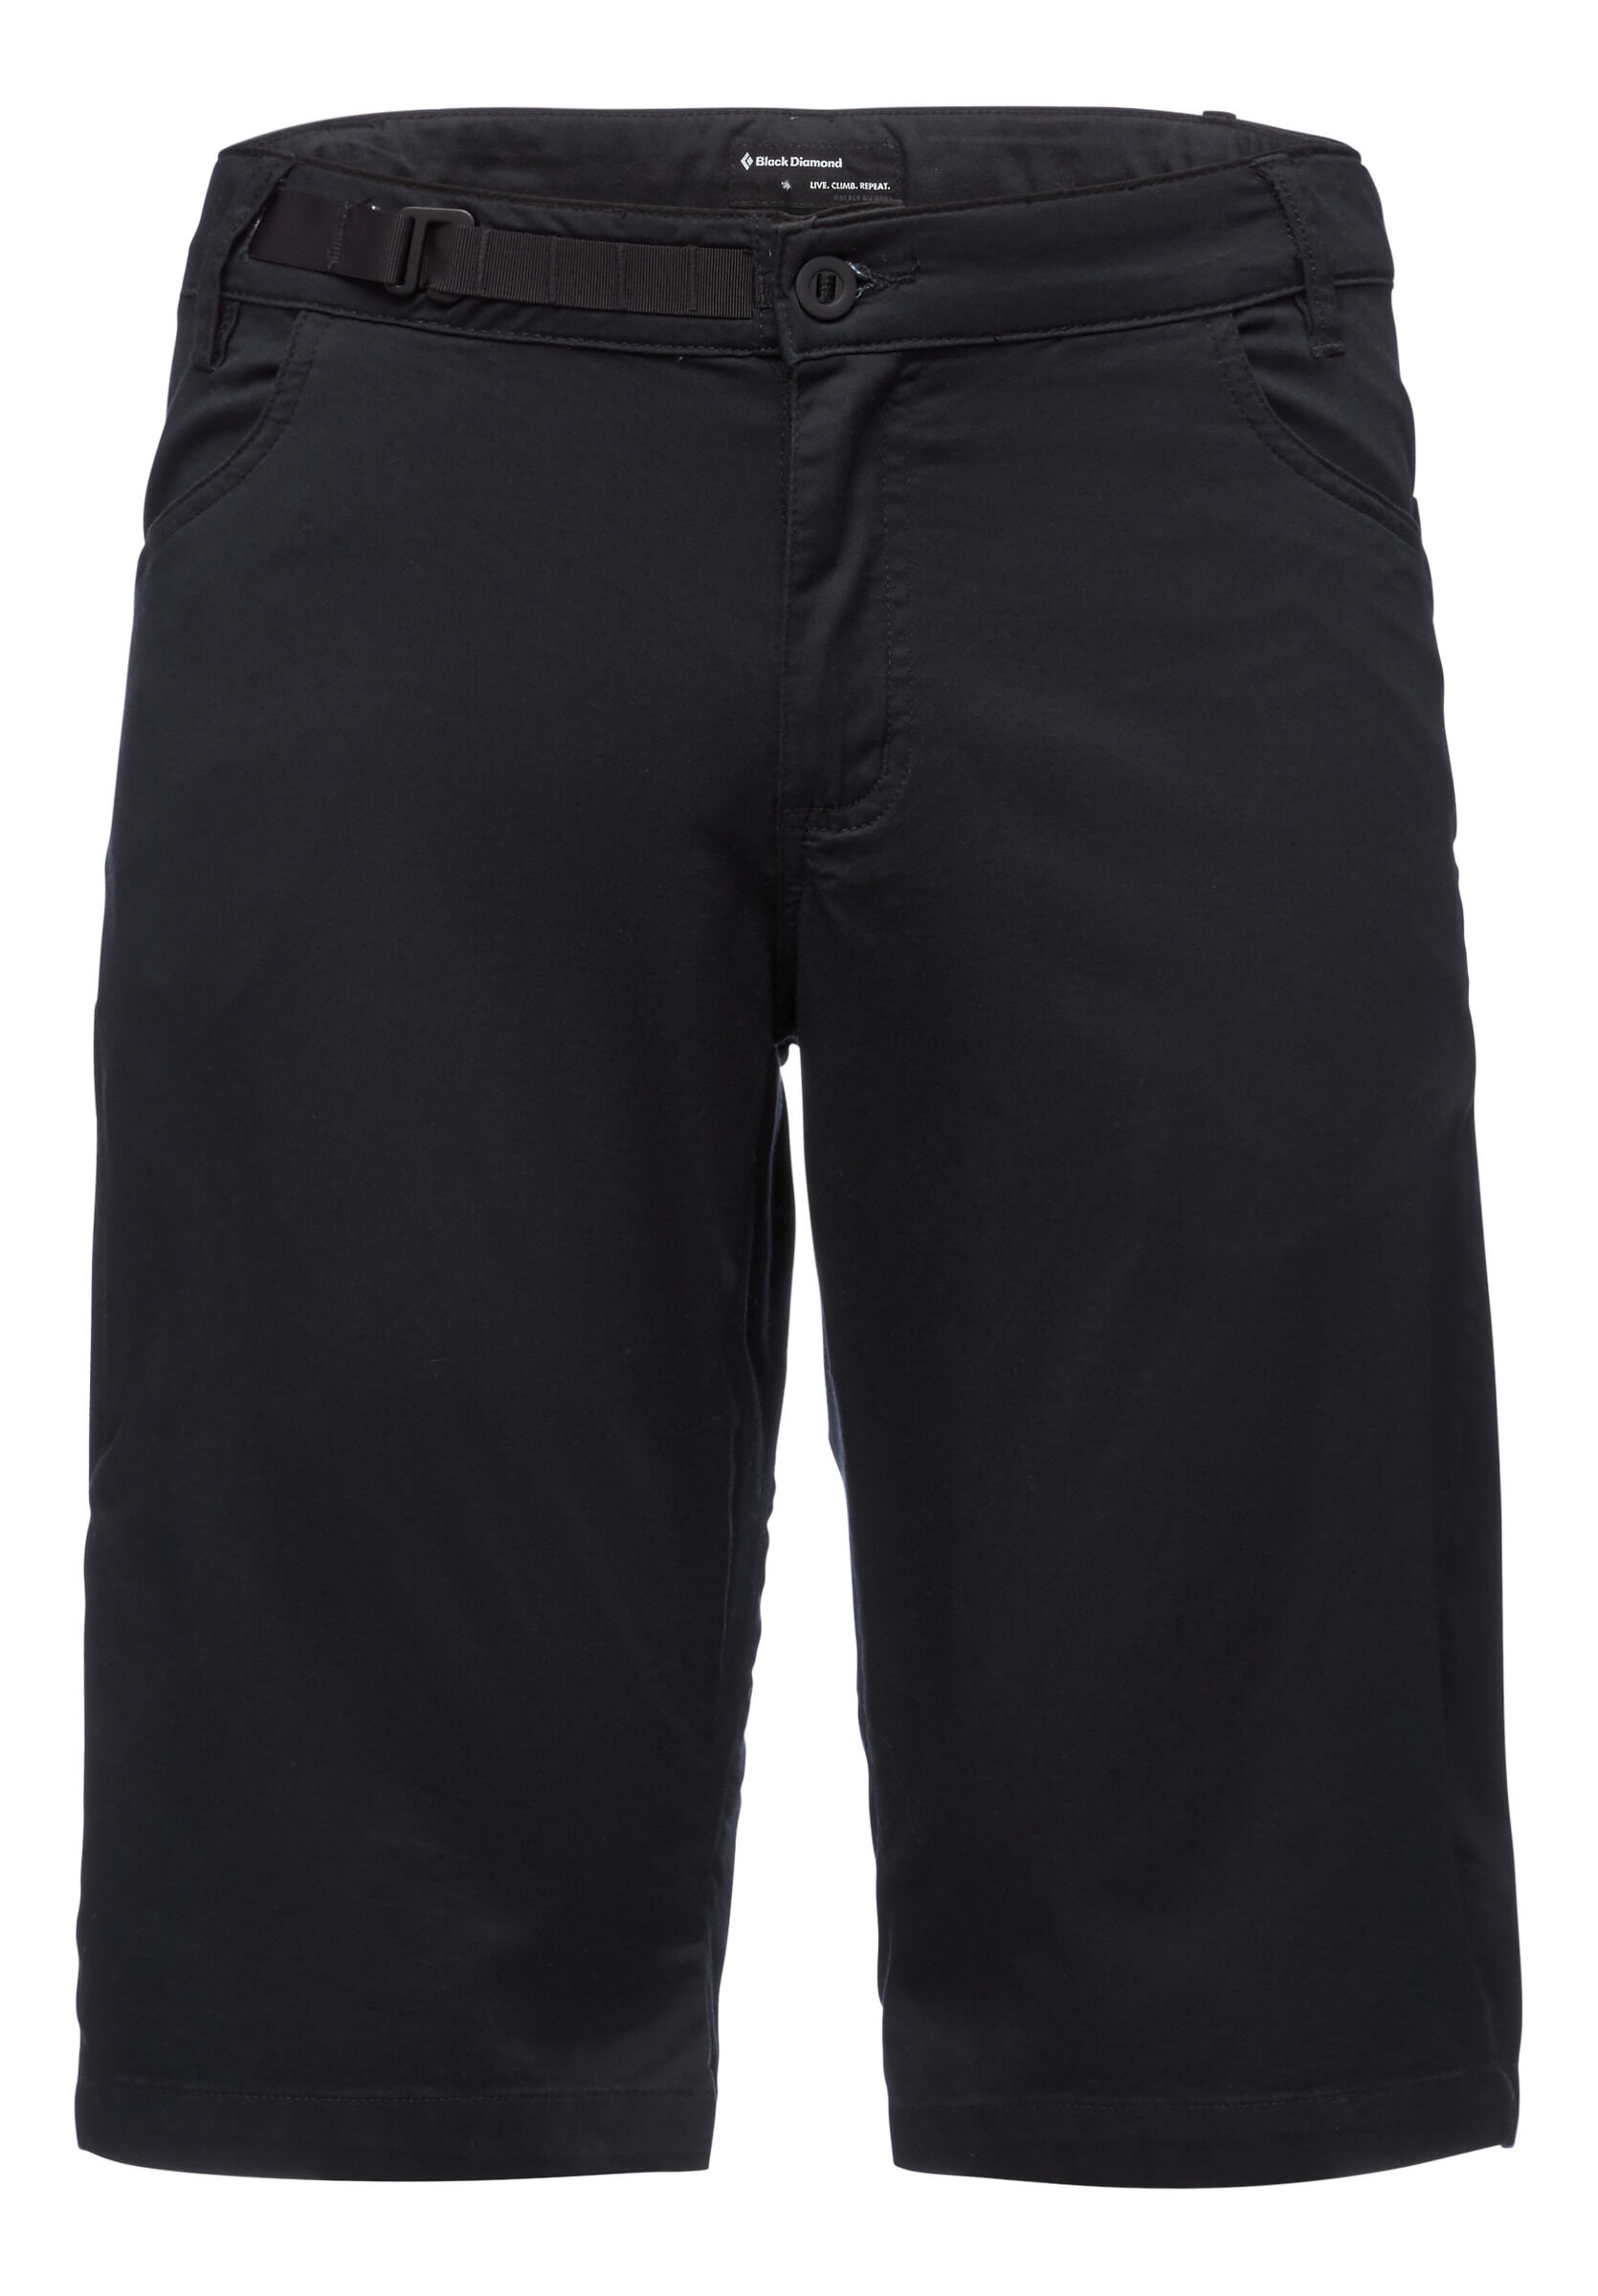 Black Diamond - Credo Shorts - Climbing pants - Men's